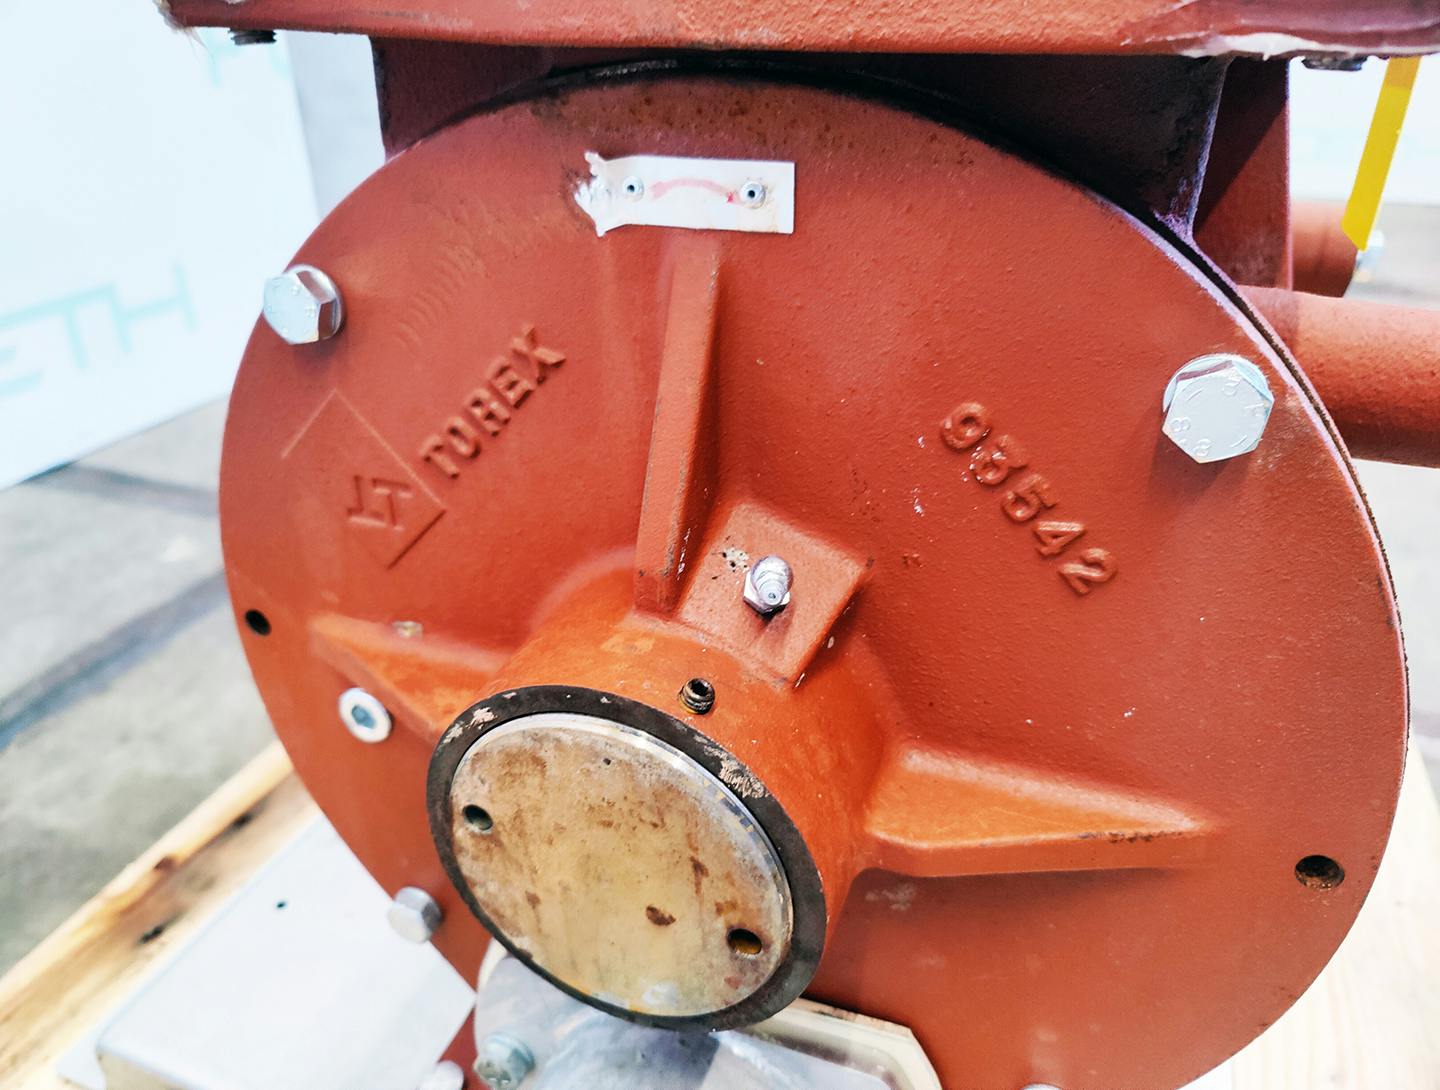 Torex 93502 - Rotating valve - image 10